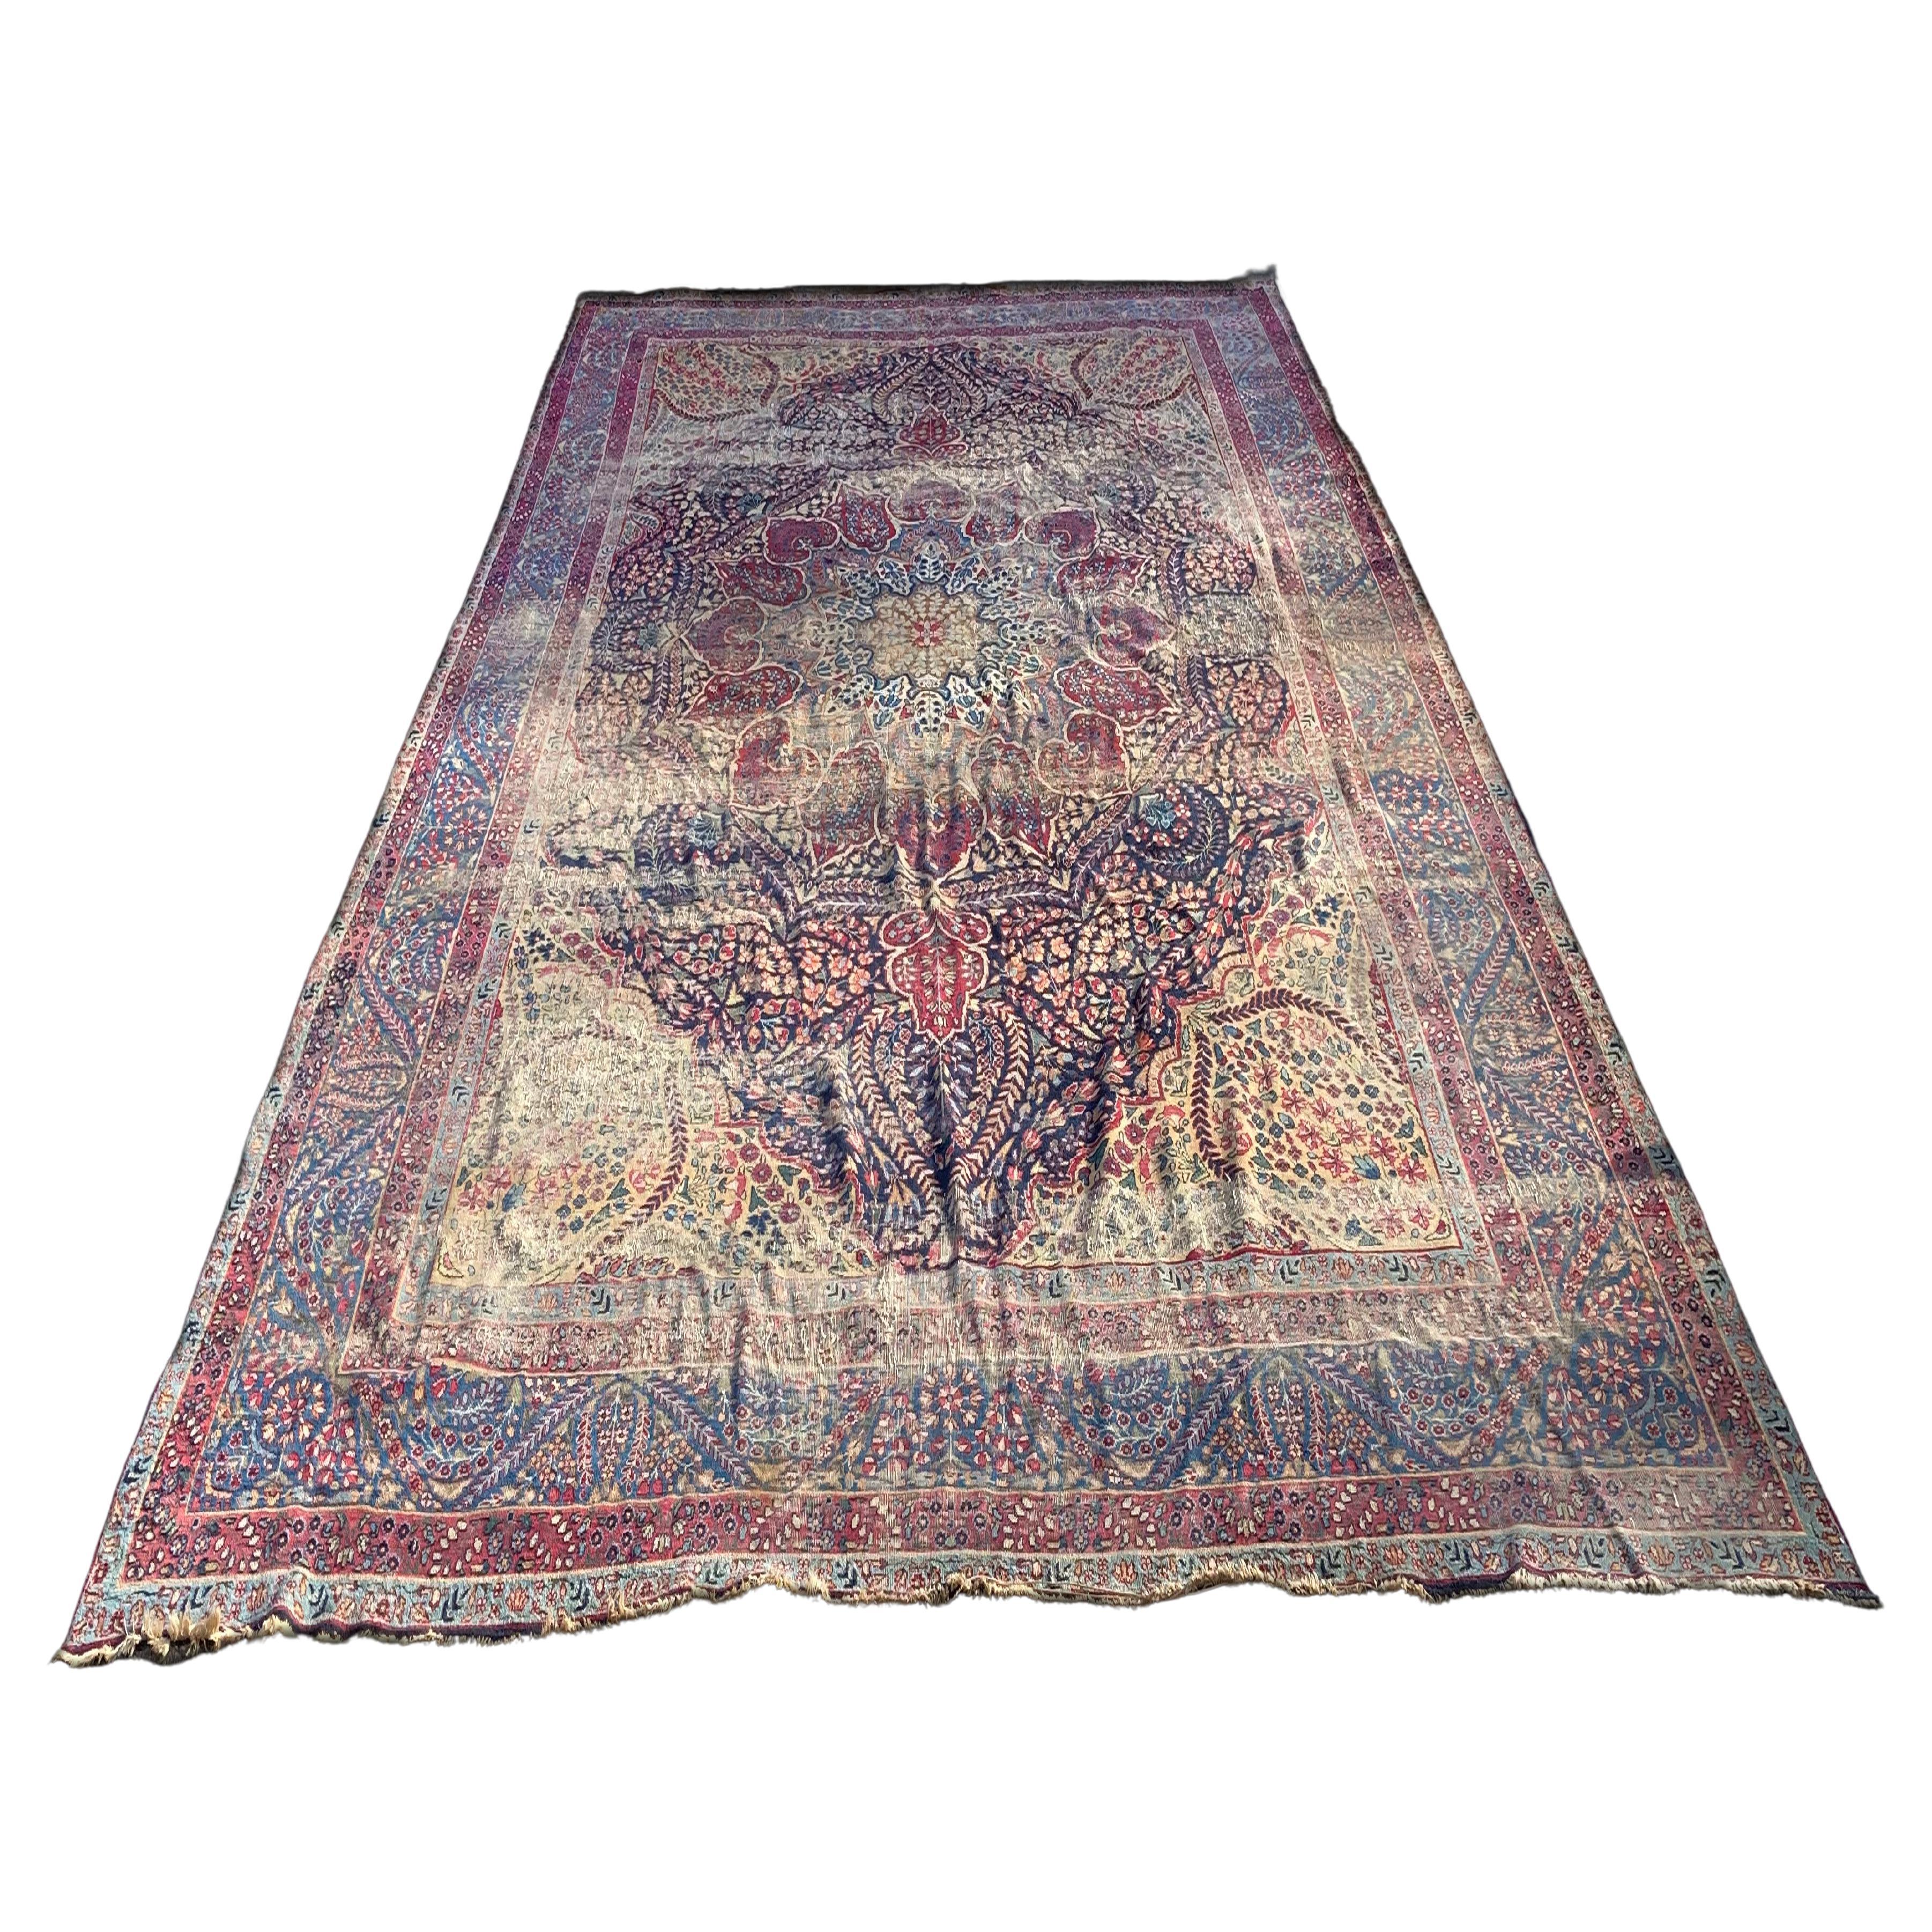 Antique Persian Kirman Rug